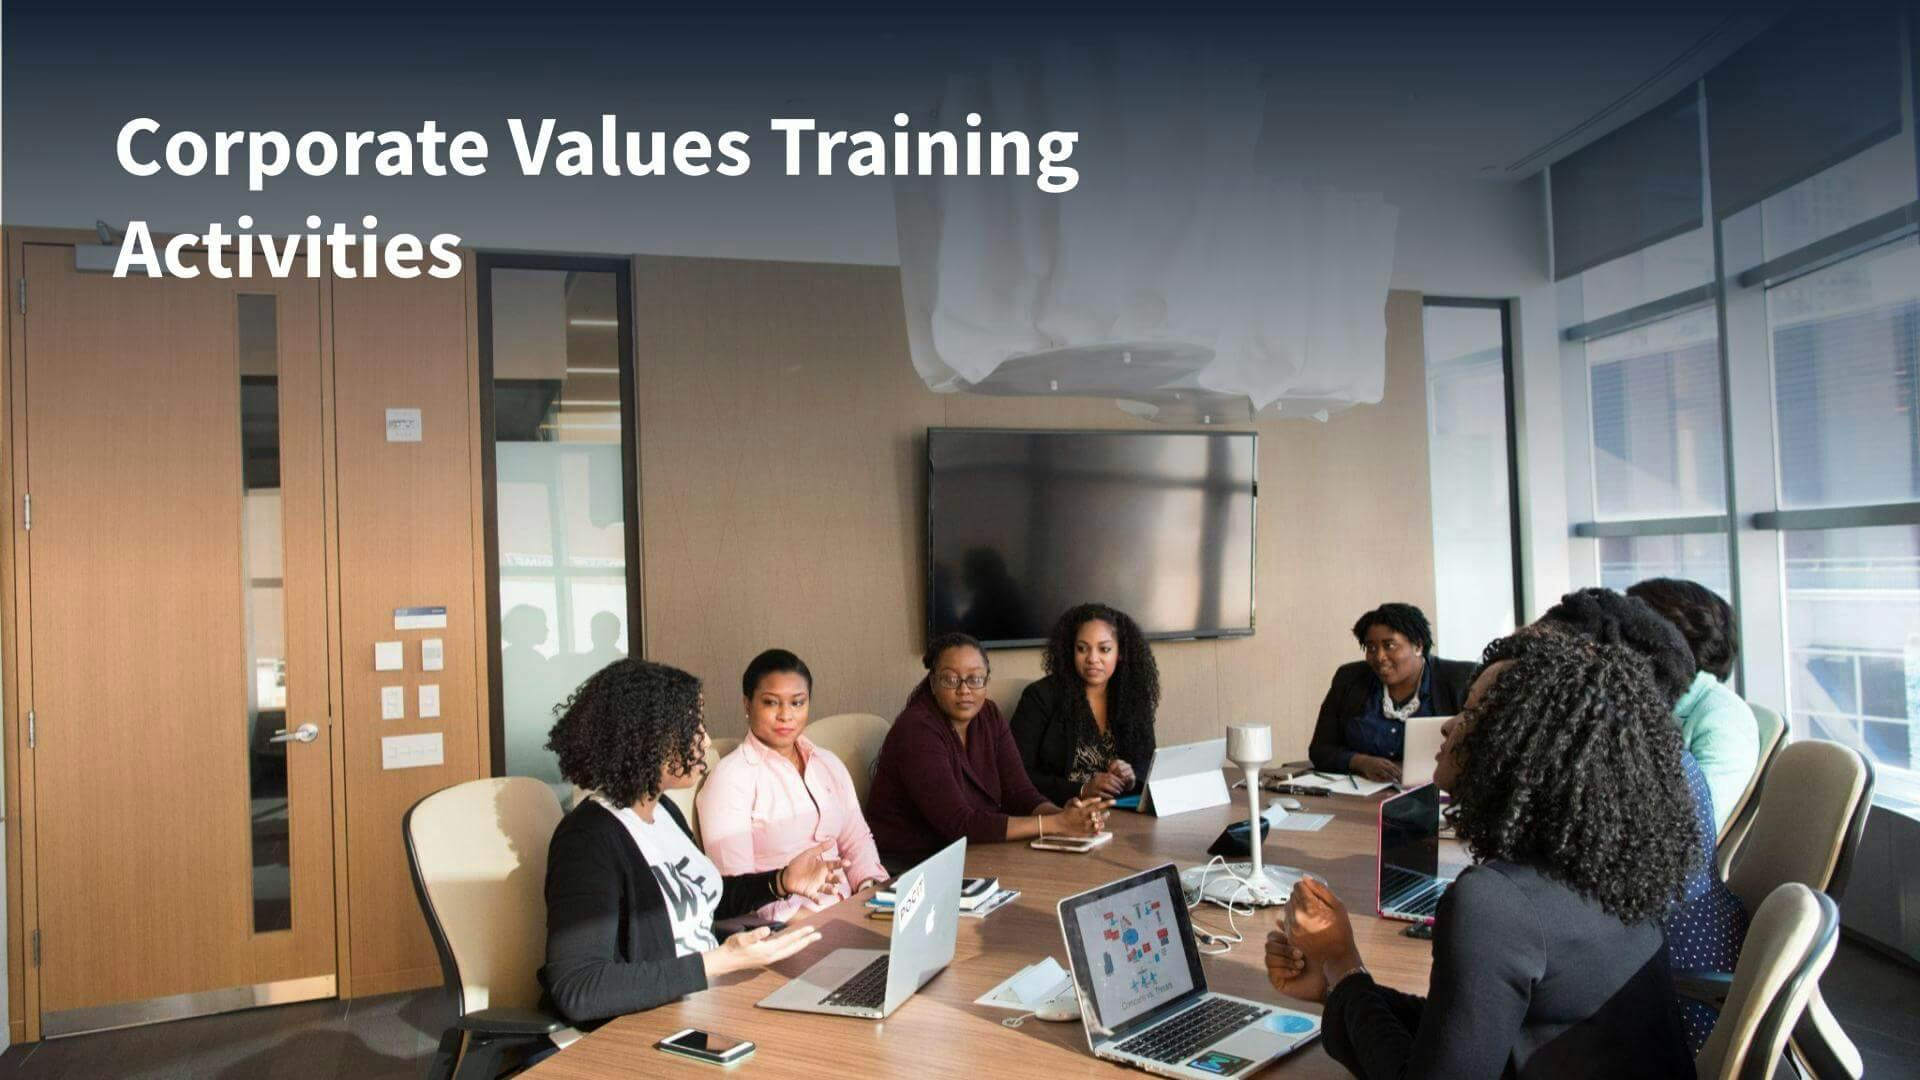 Corporate Values Training Activities